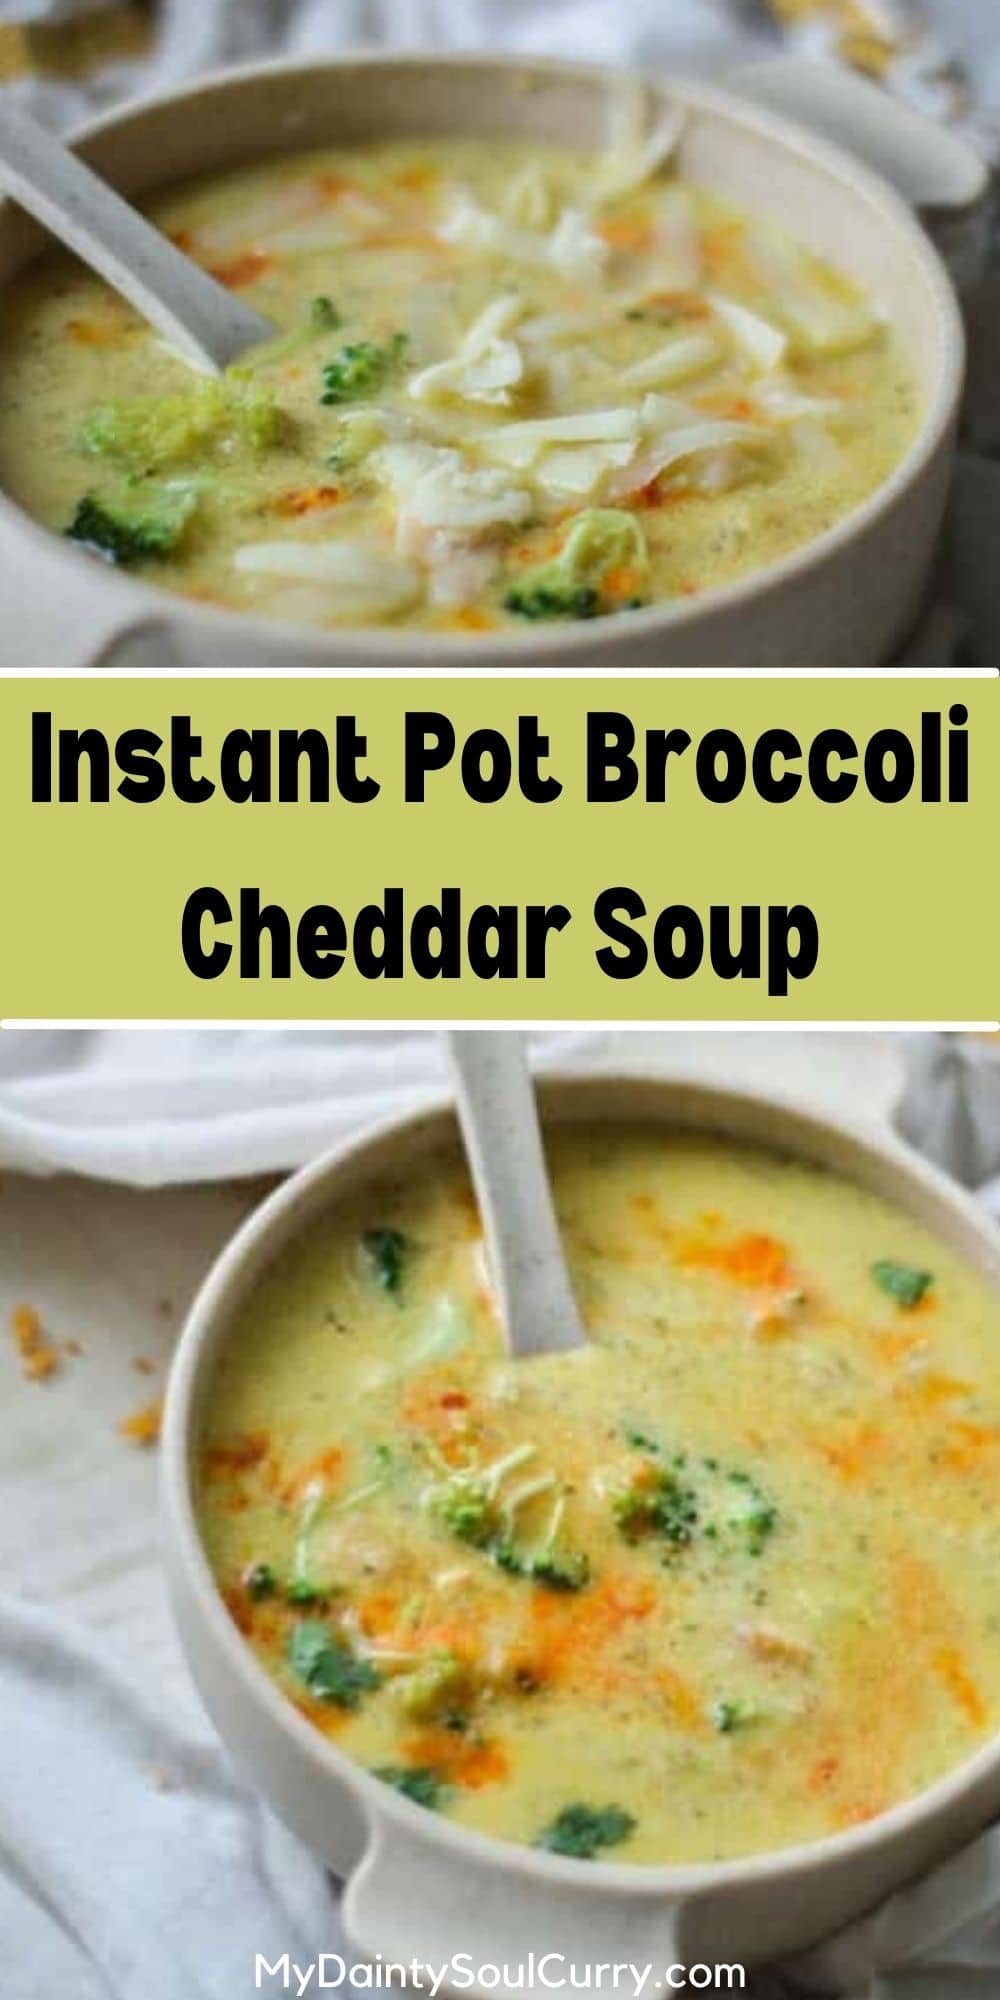 Instant Pot Broccoli Cheddar Soup - My Dainty Soul Curry